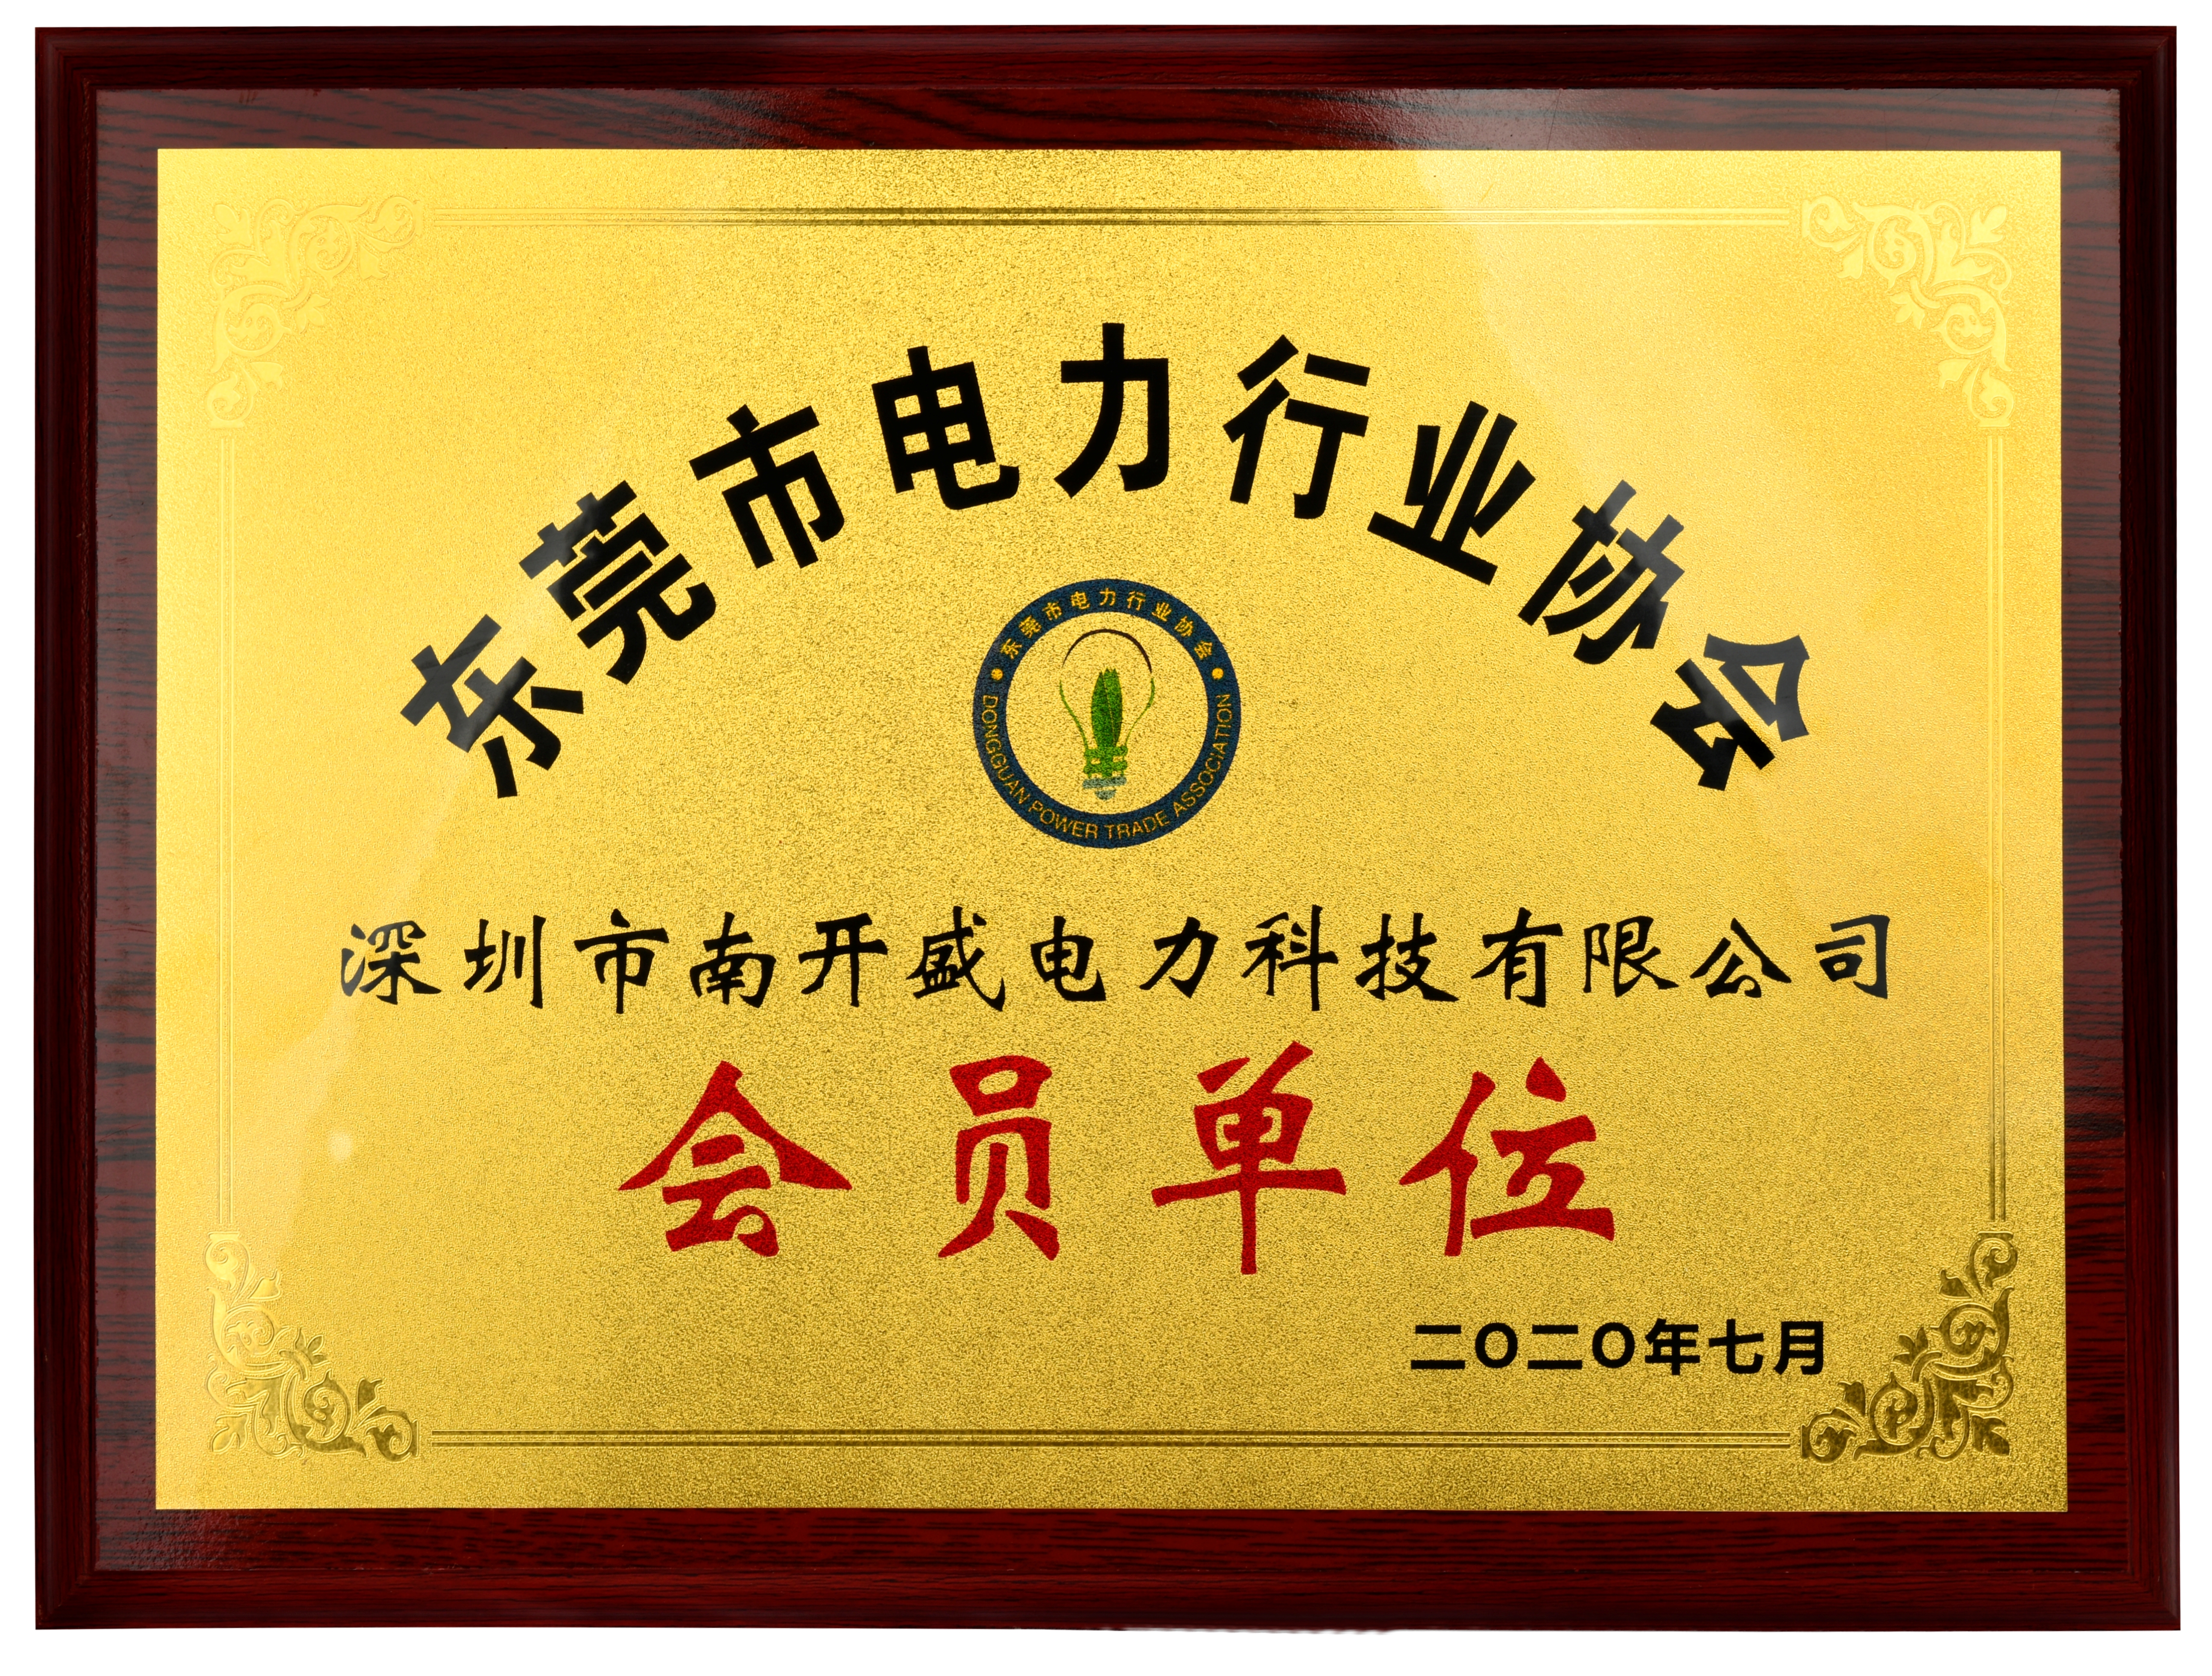 Member of Dongguan Electric Power Industry Association